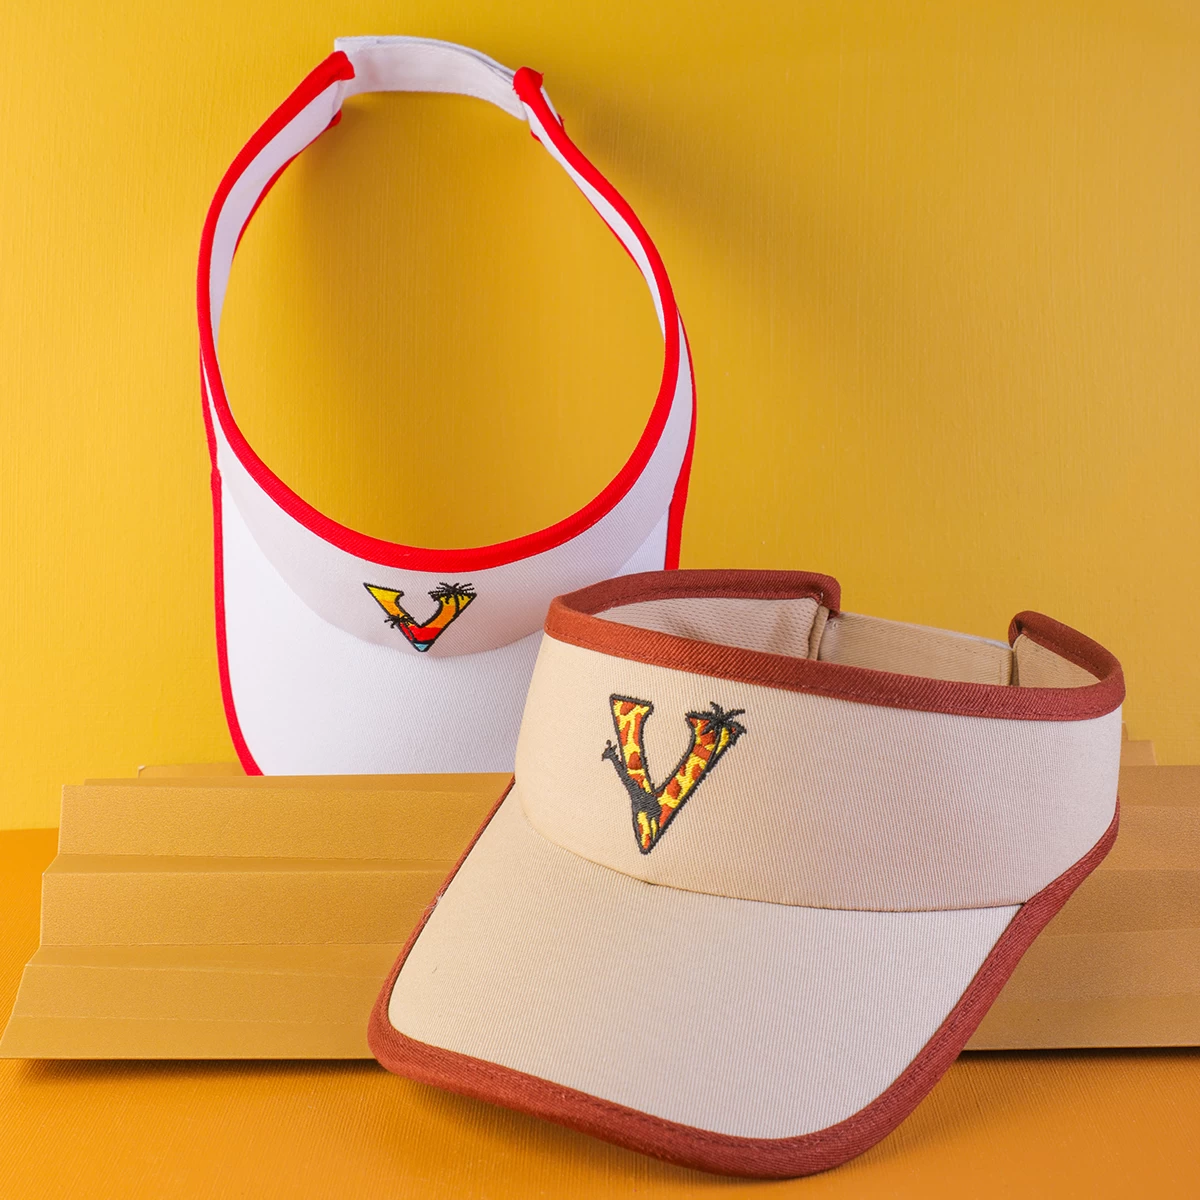 plain vfa logo visor caps, design logo cotton sports sun visor hats, design logo sports hats